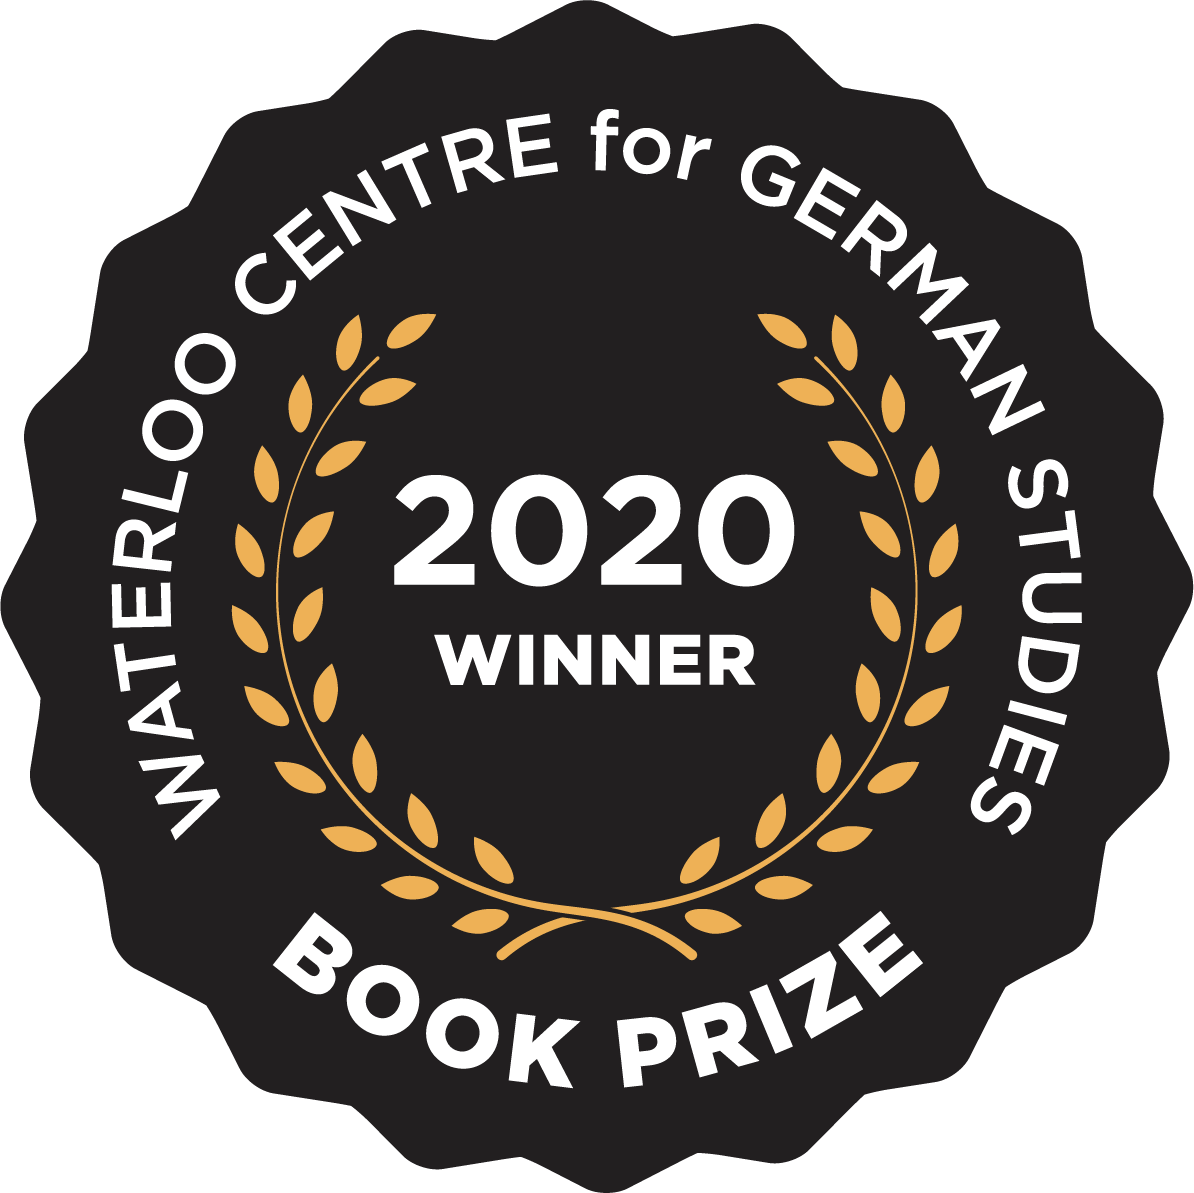 WCGS Book Prize 2020 Winner seal